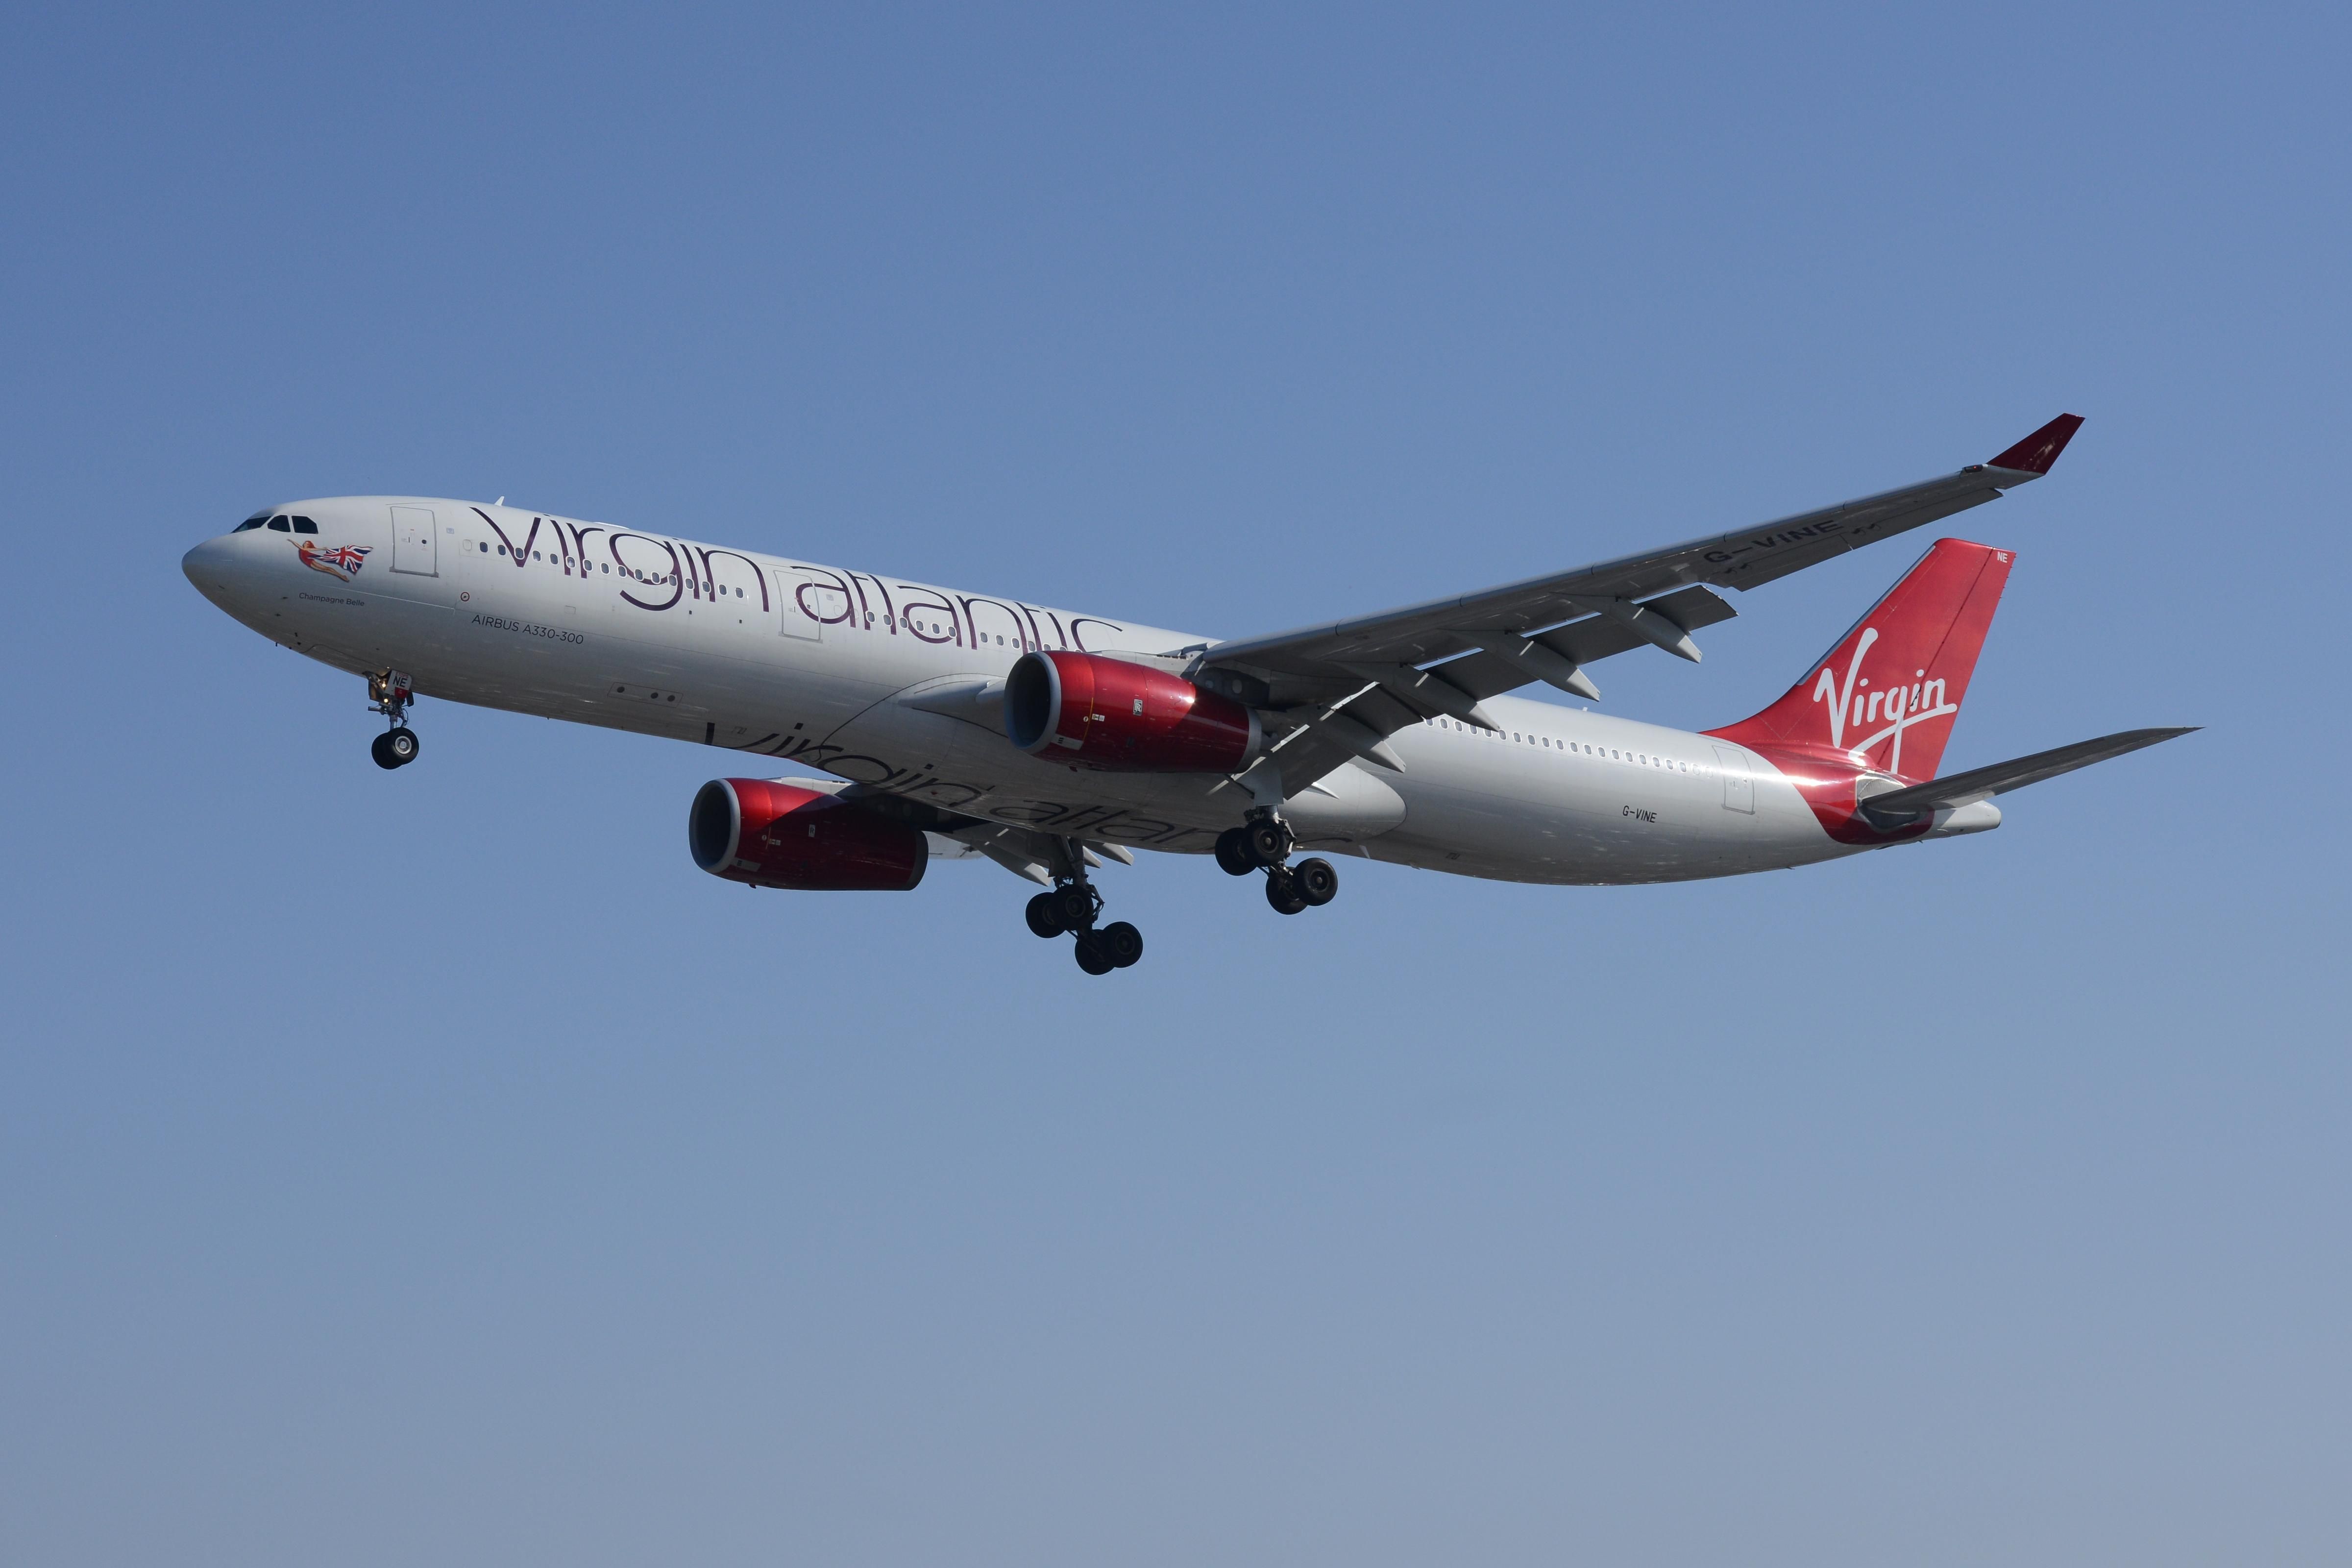 Virgin Atlantic Airbus A330 Landing In Sunny Conditions